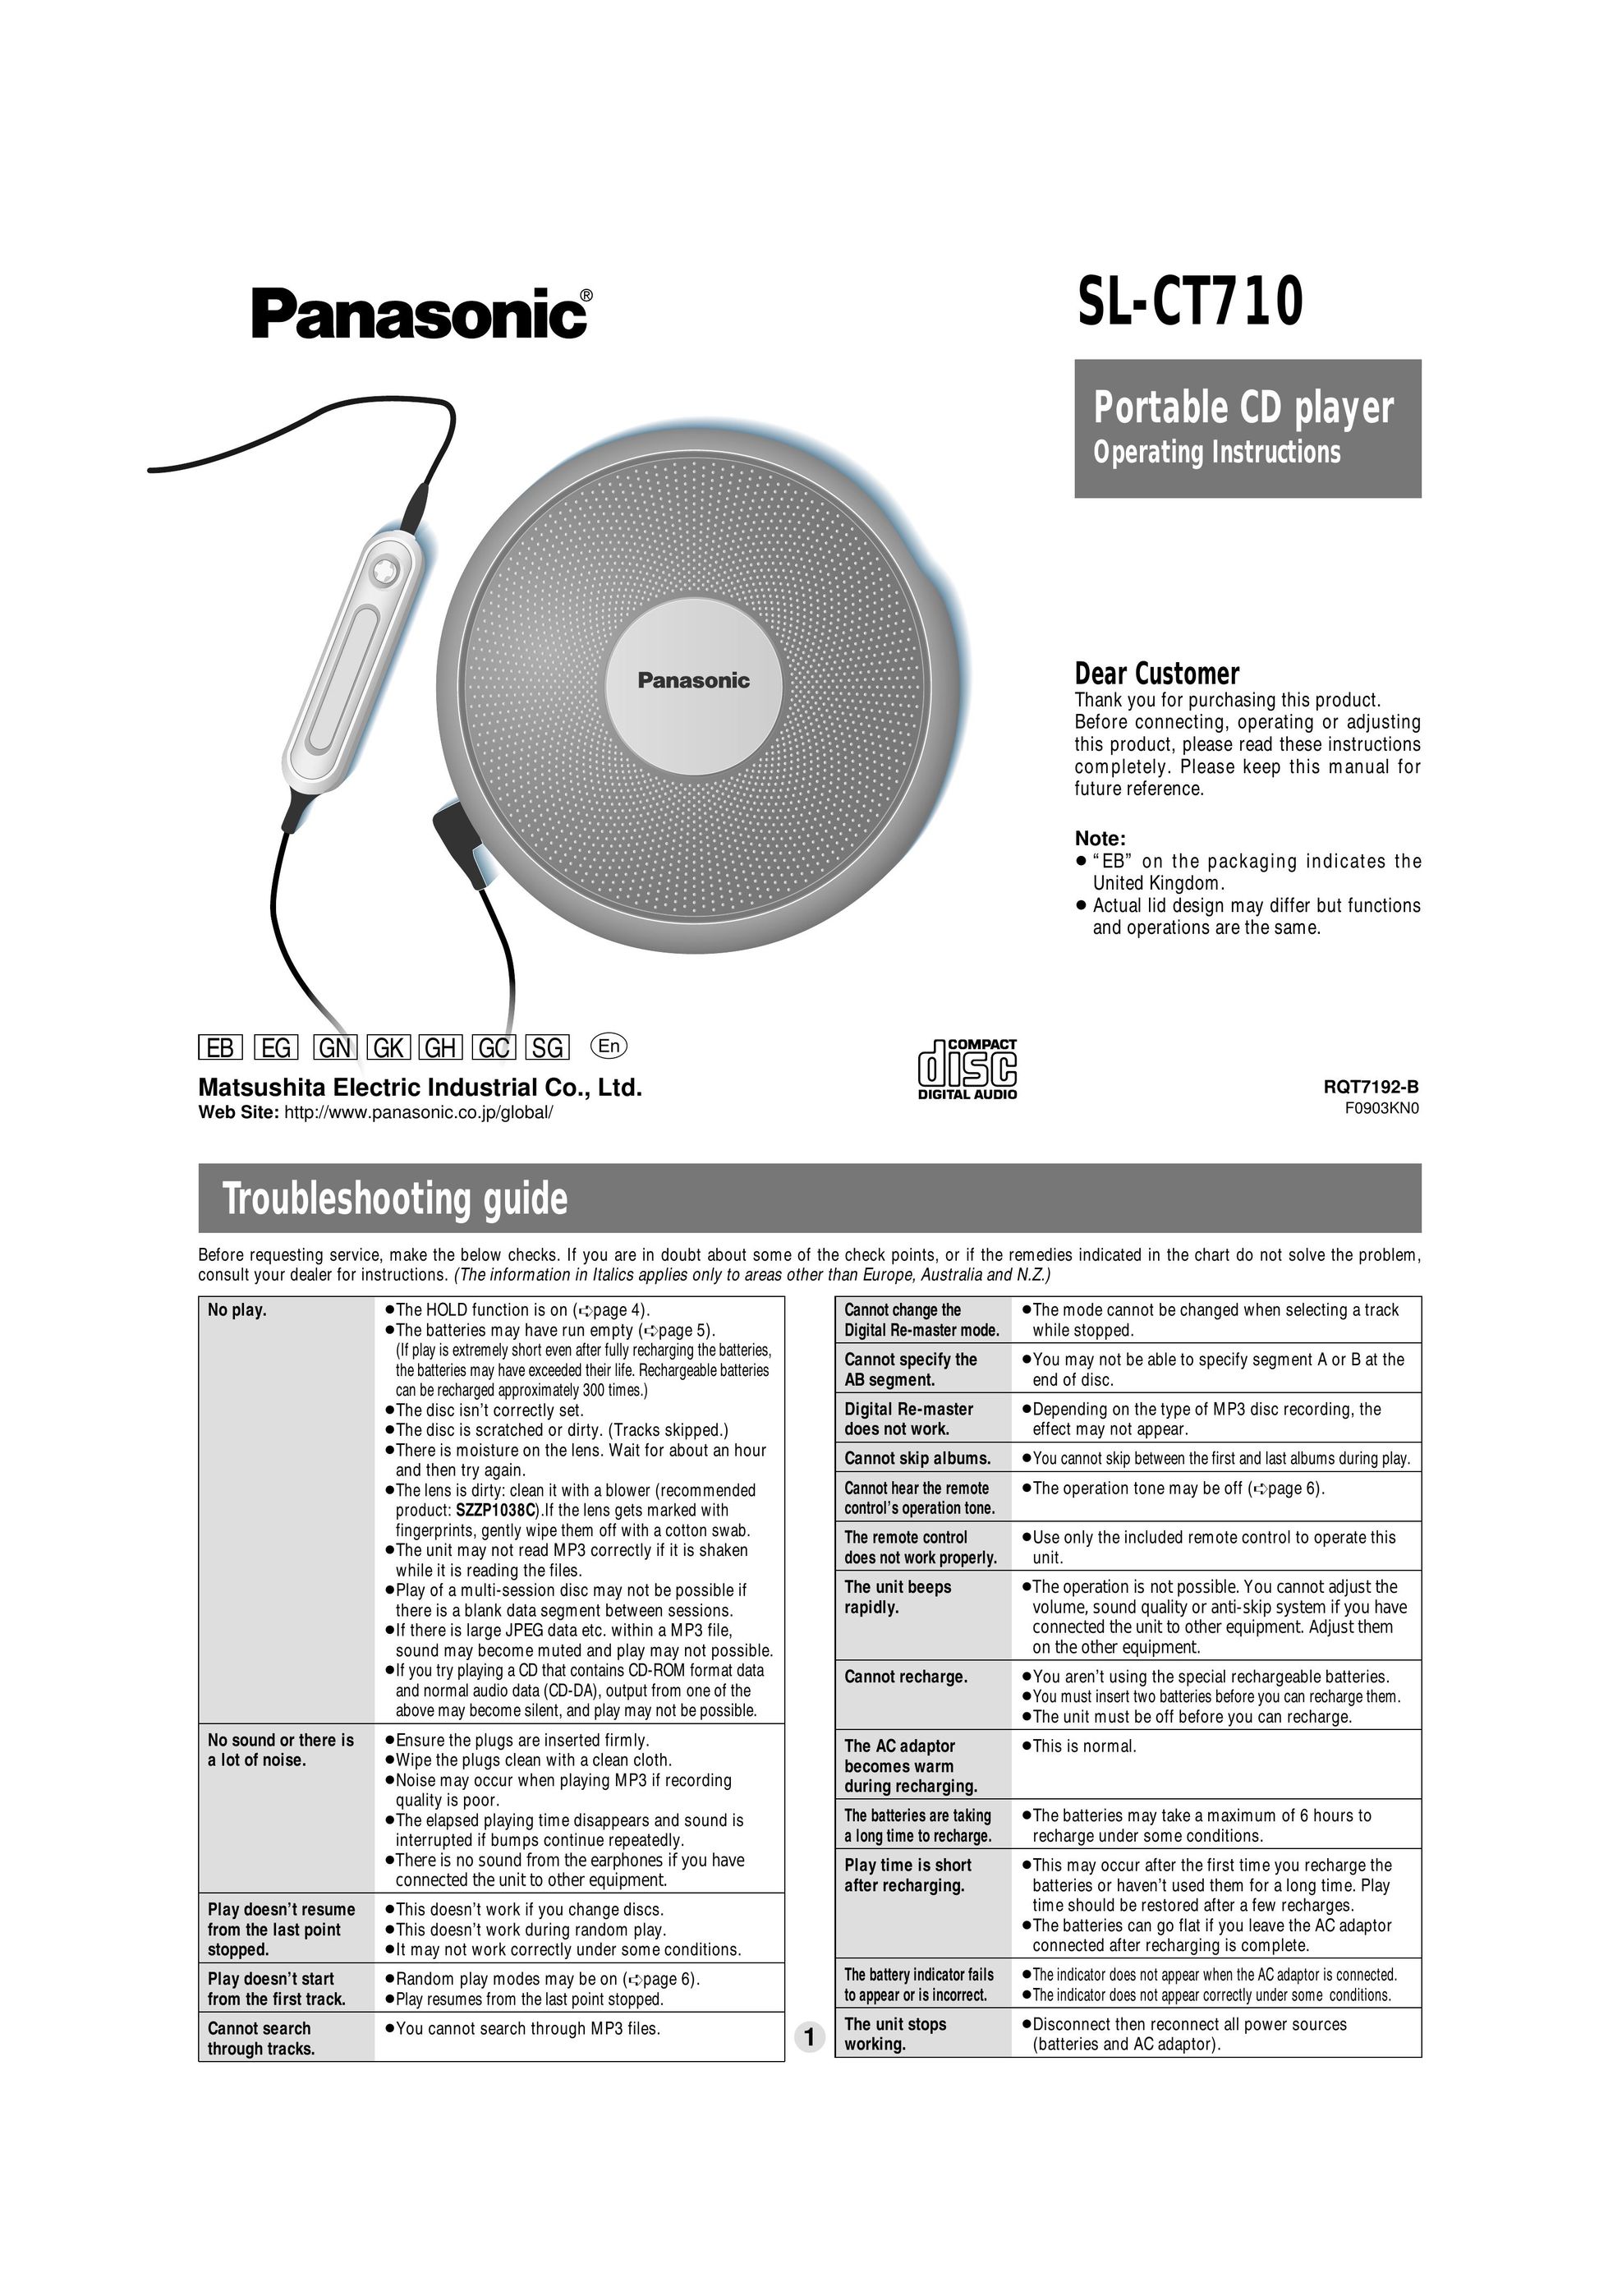 Panasonic SL-CT710 Portable CD Player User Manual